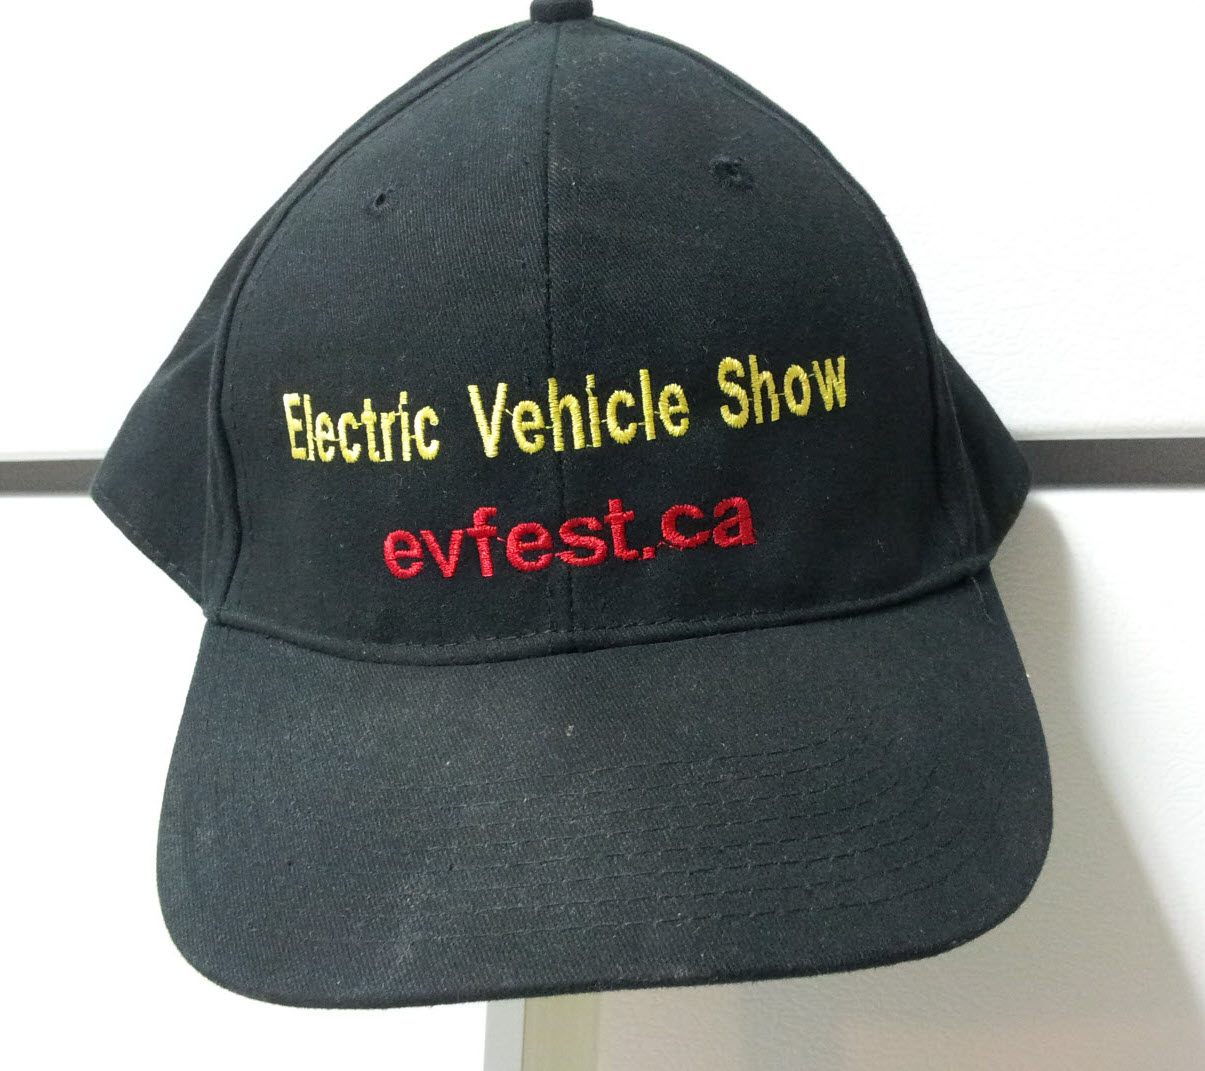 EV Fest Baseball Cap - as seen at Registration - Additional Items